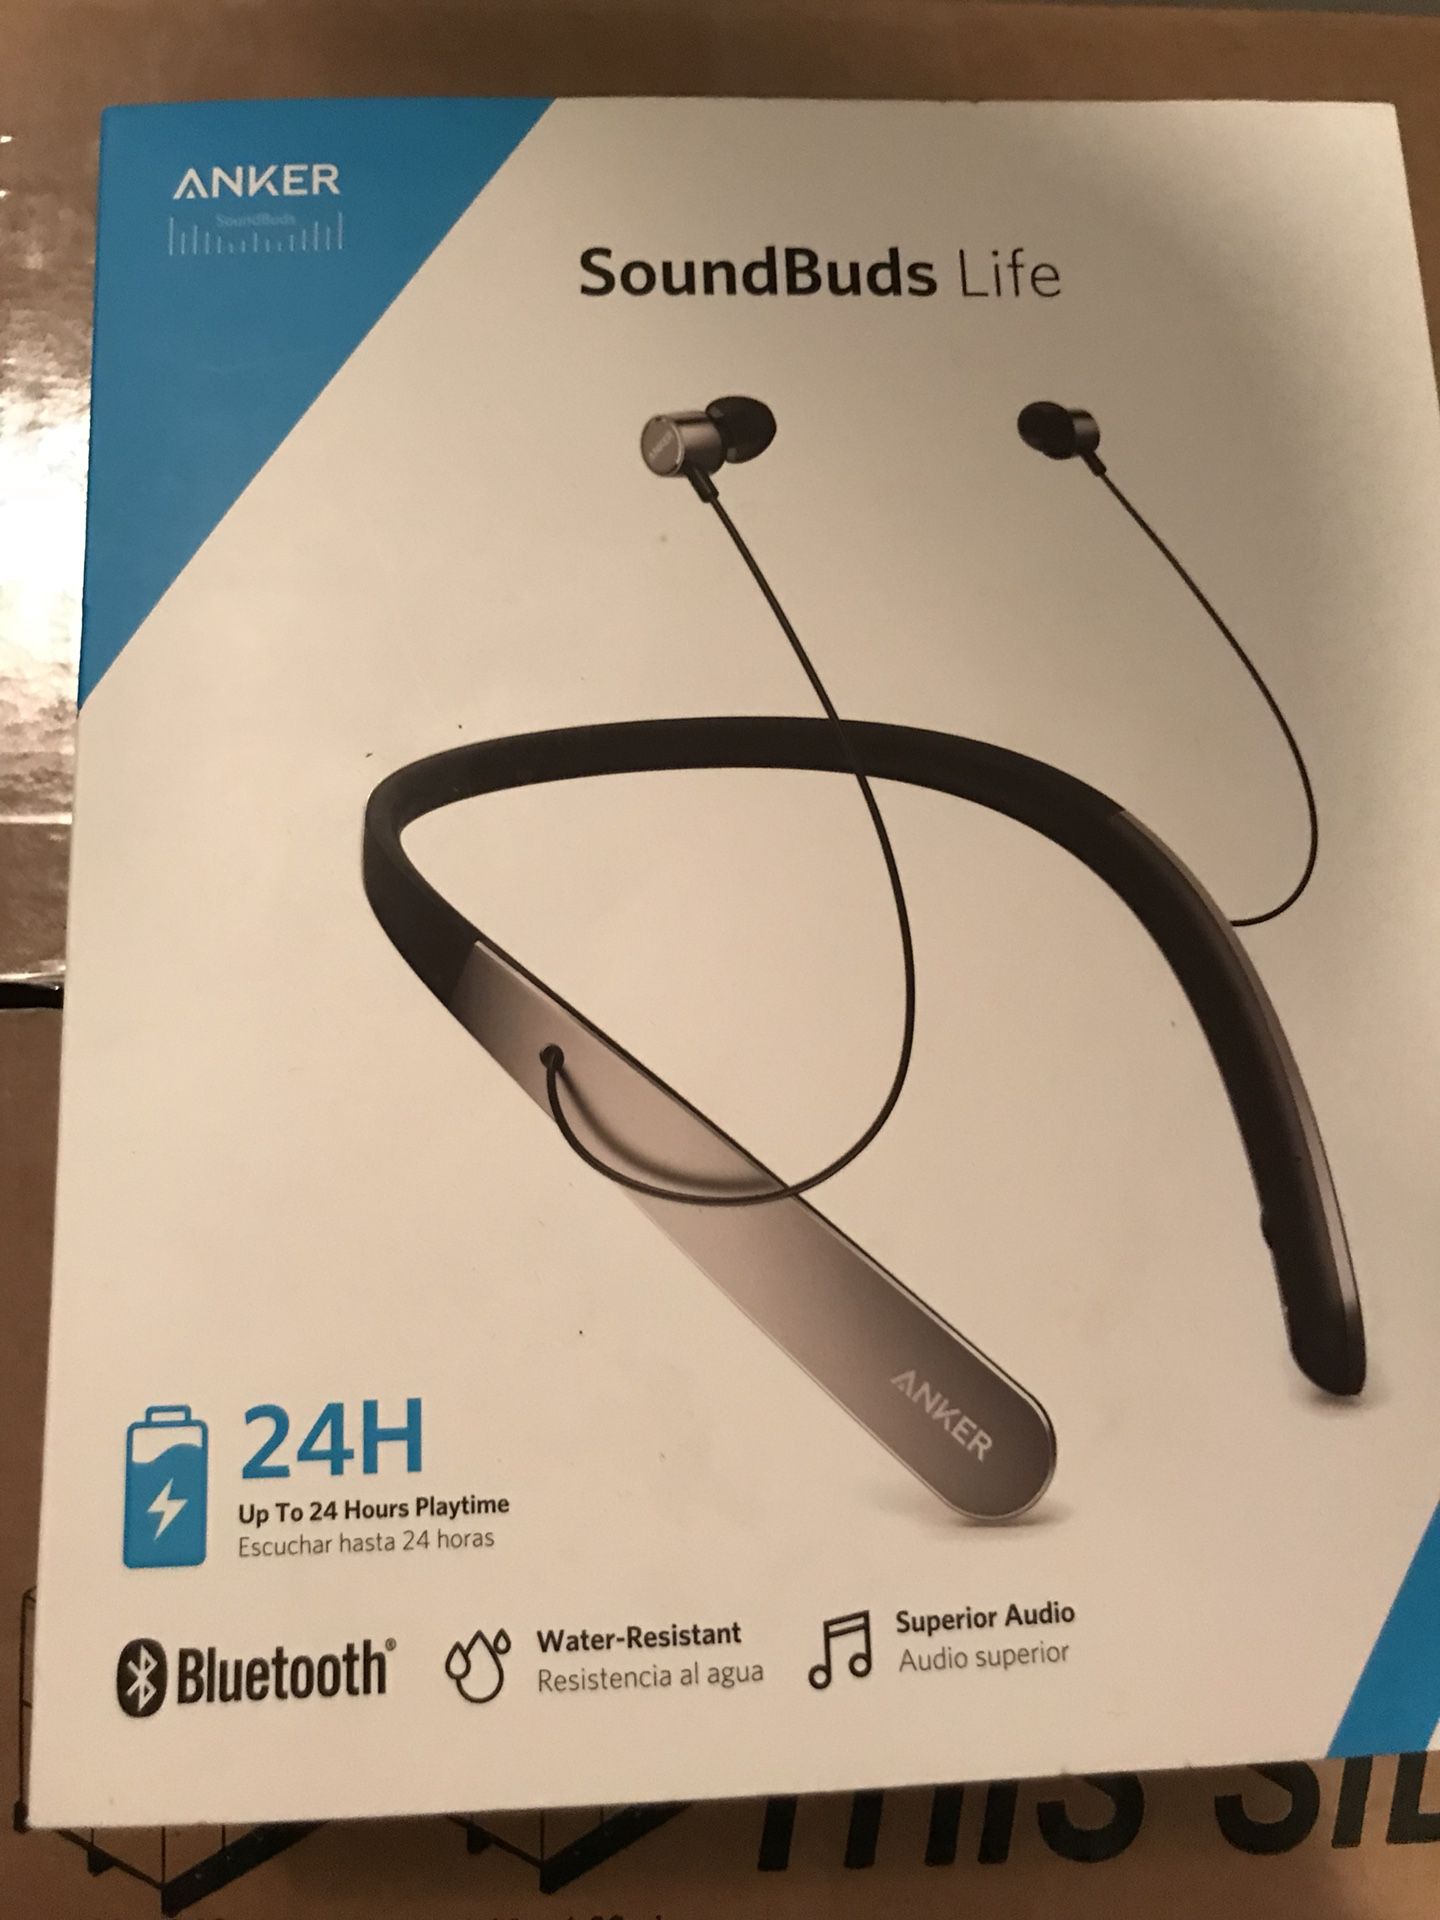 Bluetooth soundbuds life by Anker